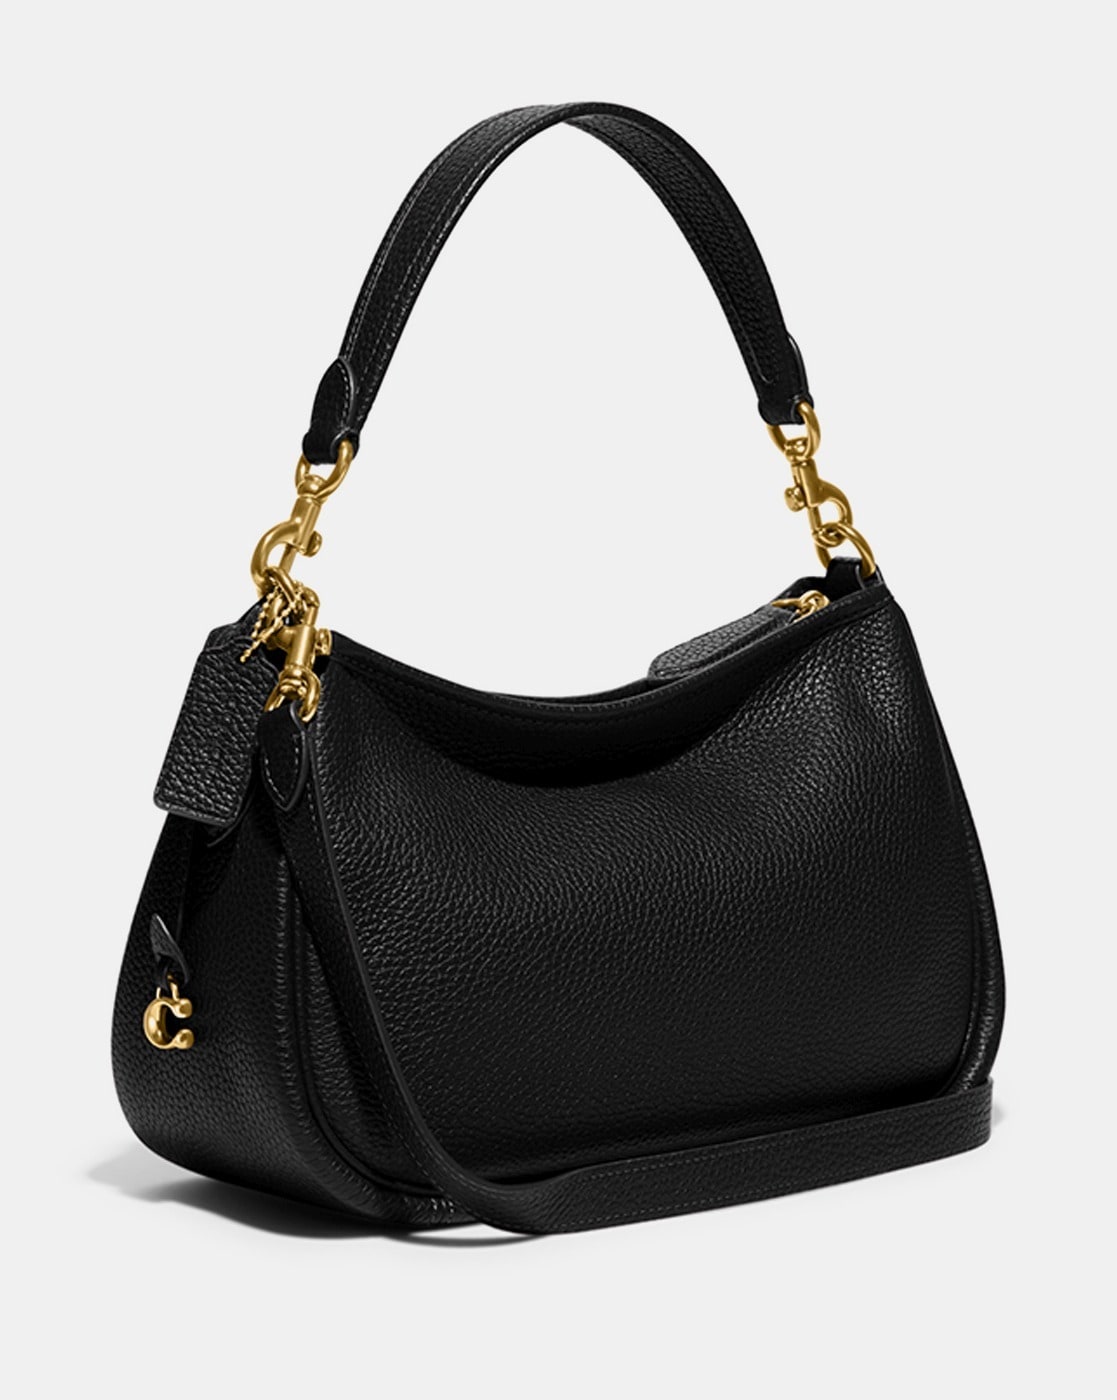 Coach leather handbags - Women's handbags